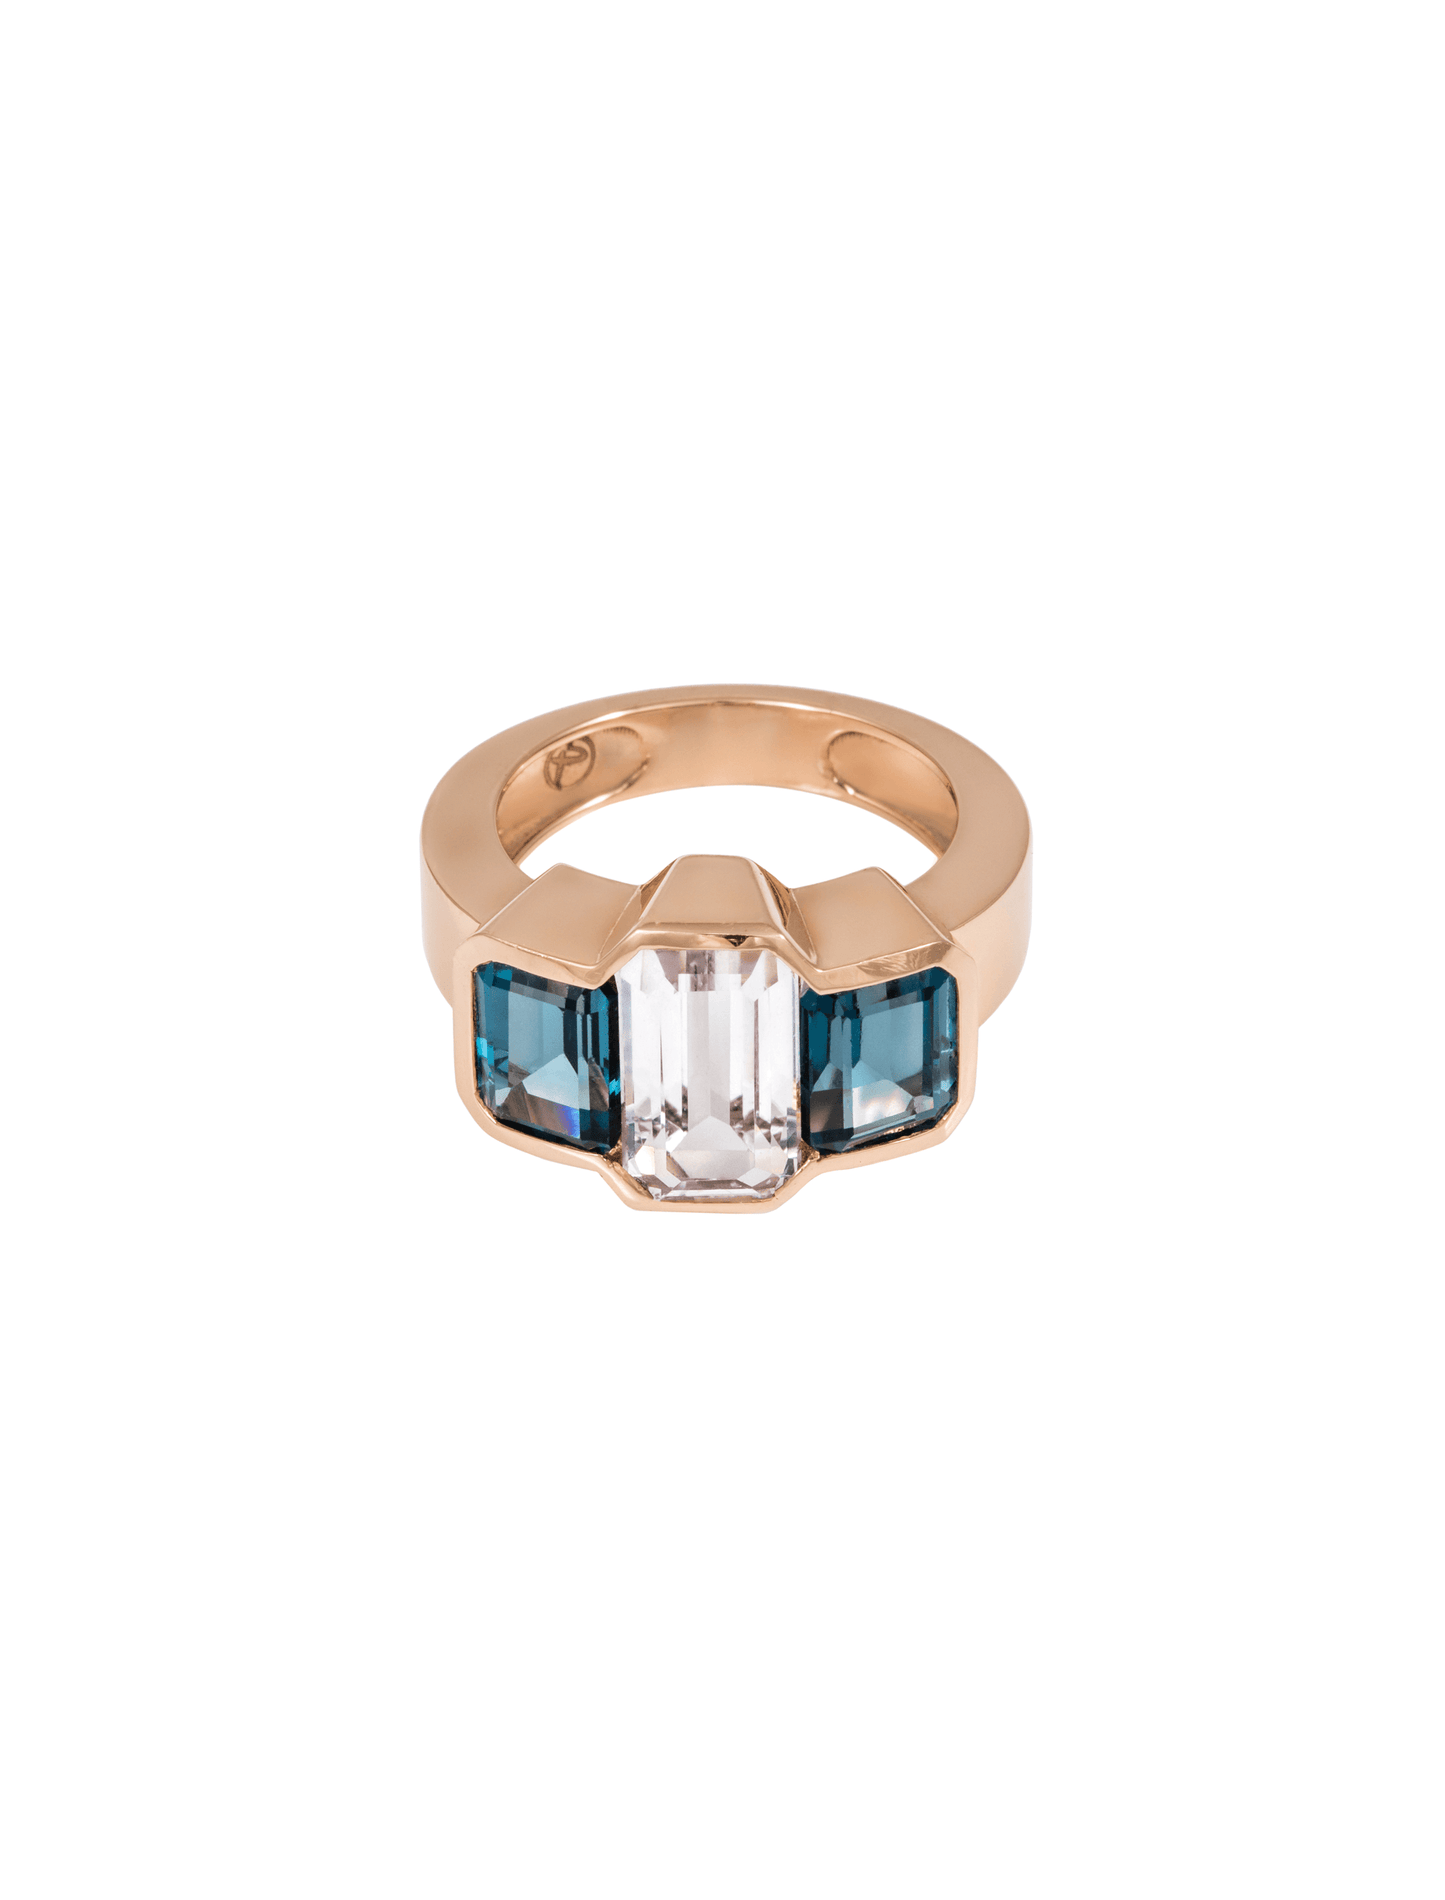 Kunzite and London Blue Gemstone Ring